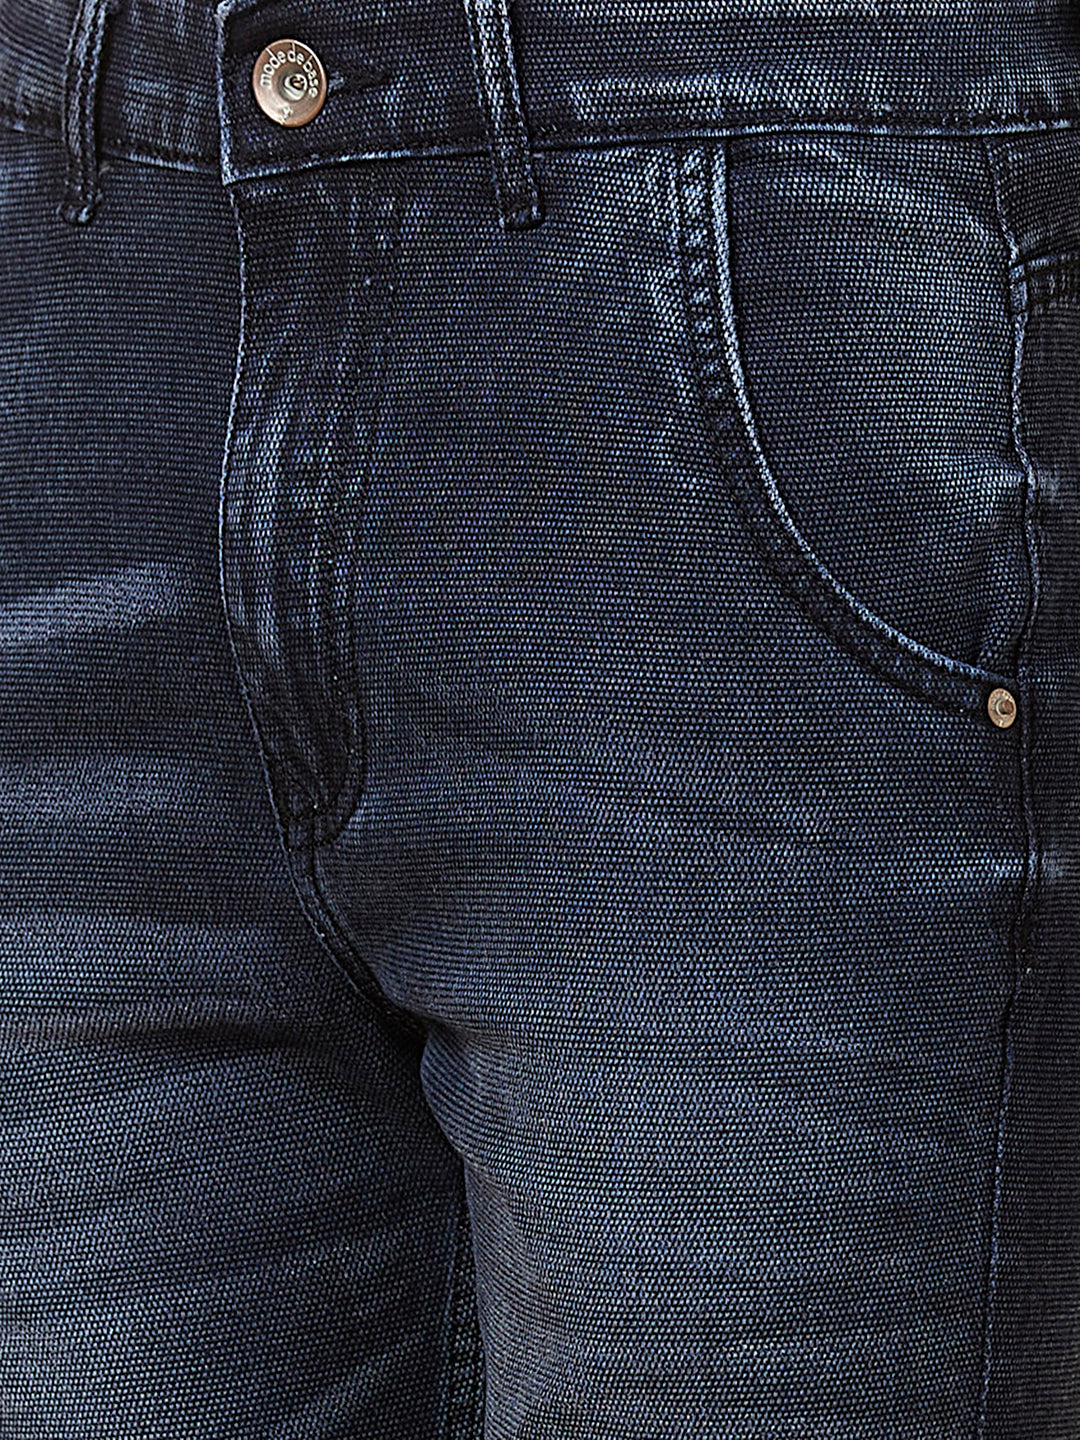 Deep Indigo Blue Boot-cut jeans with Cross Pocket